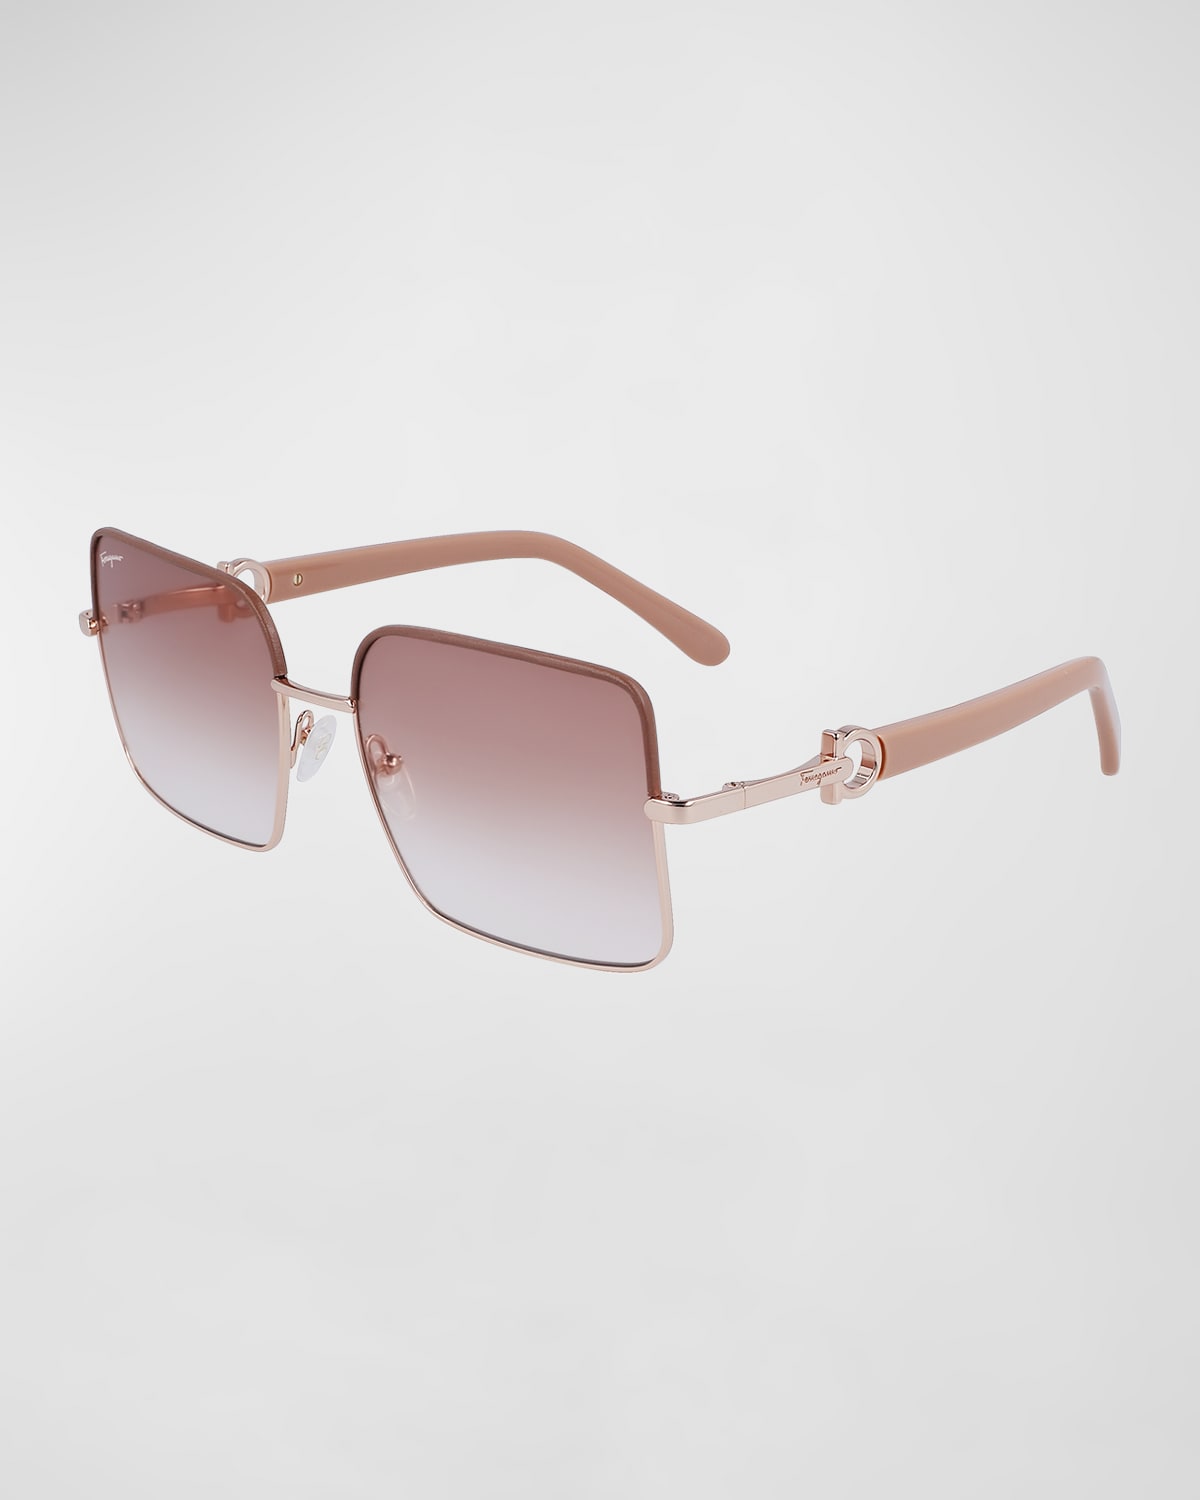 Ferragamo Sunglasses In Rose Gold/nude